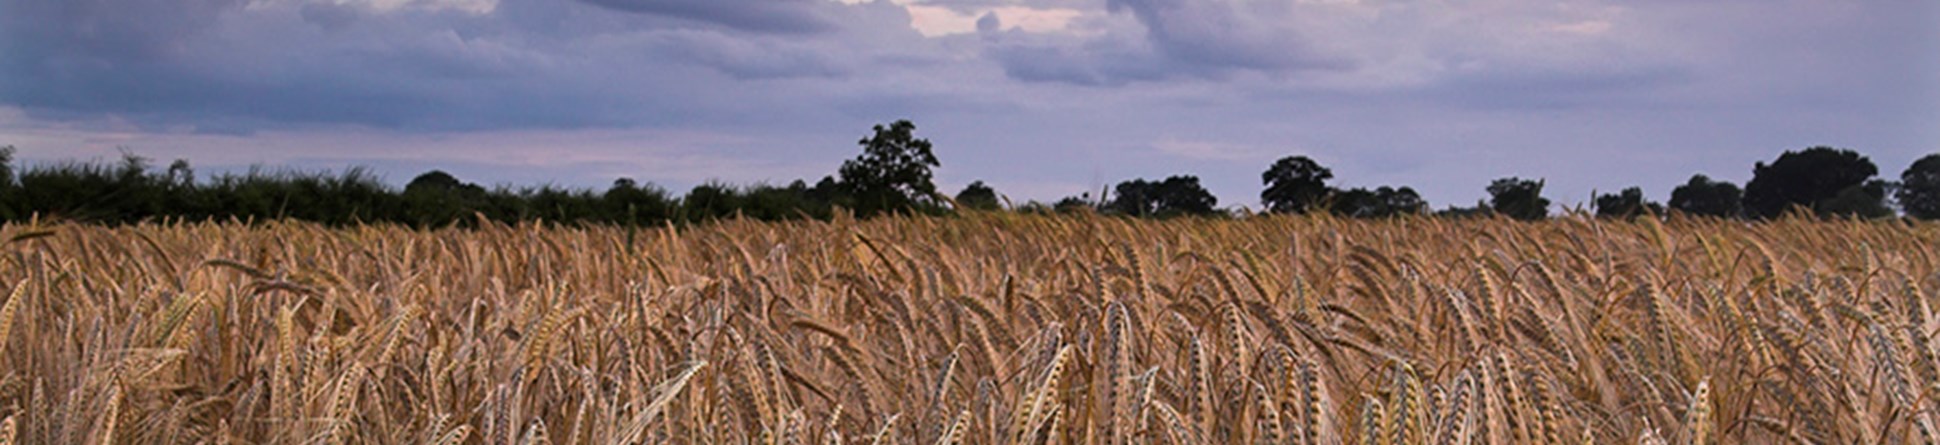 Barley stalks against a sky at dusk.